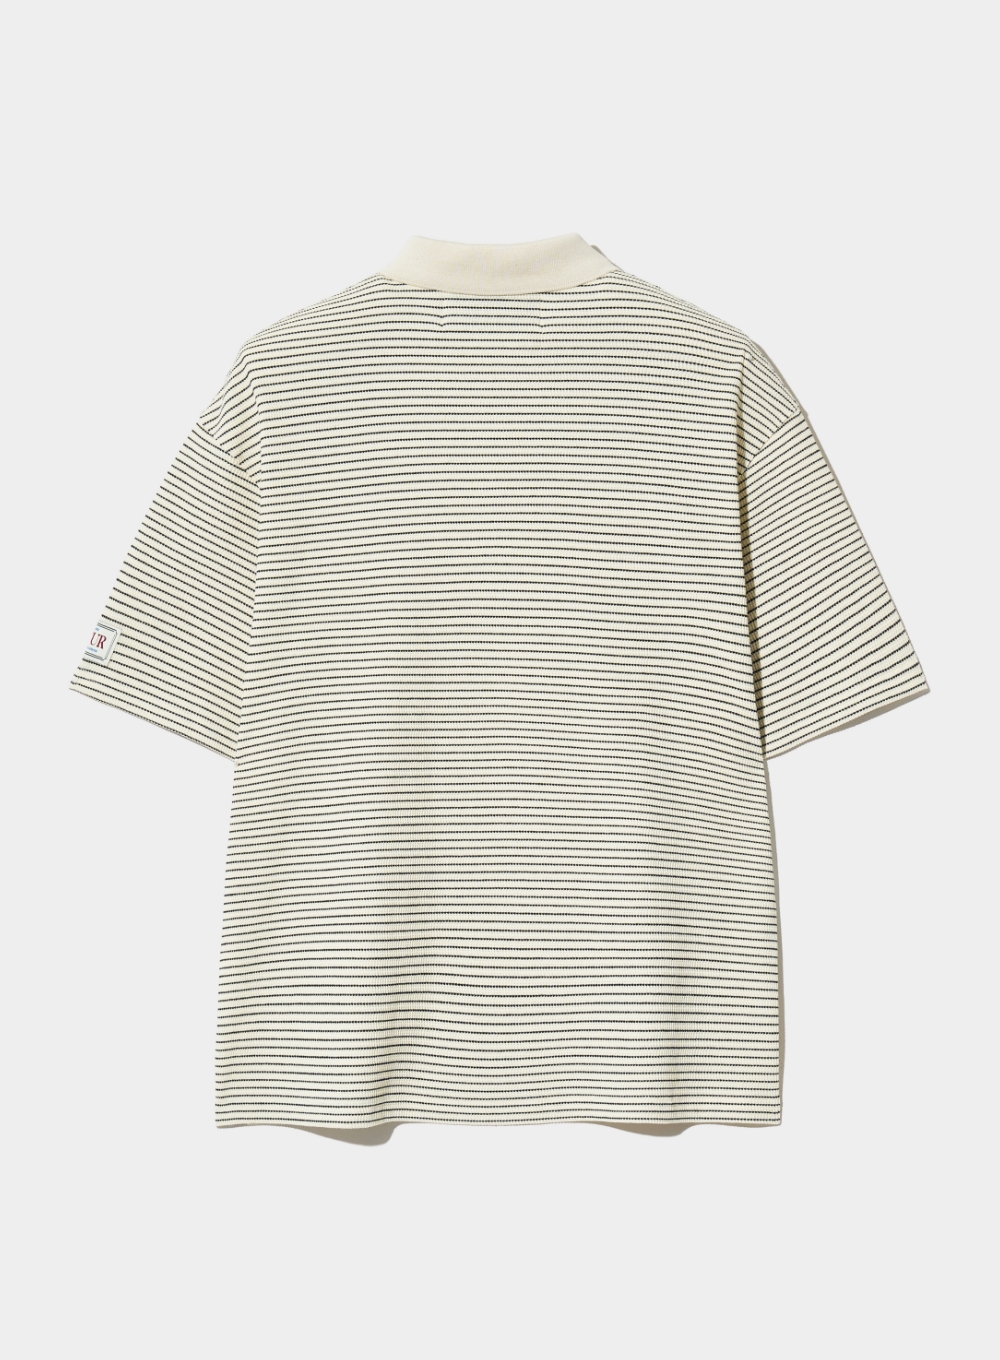 Stripe Collar T-Shirt - Ivory Black